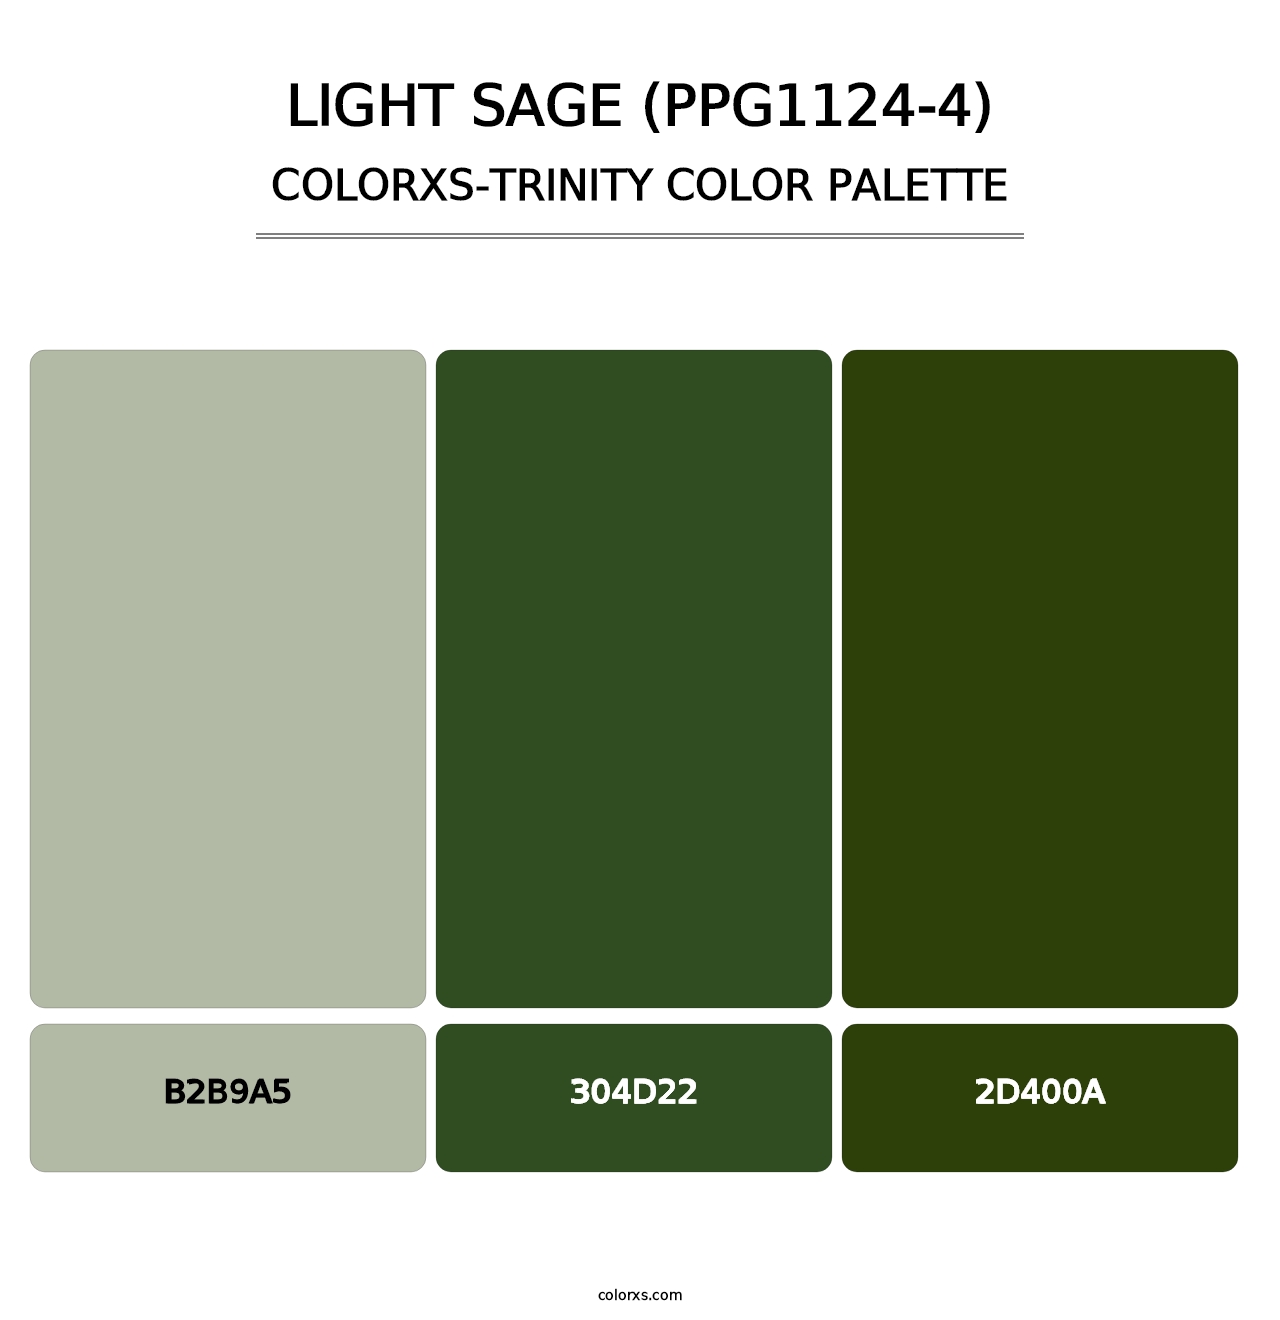 Light Sage (PPG1124-4) - Colorxs Trinity Palette